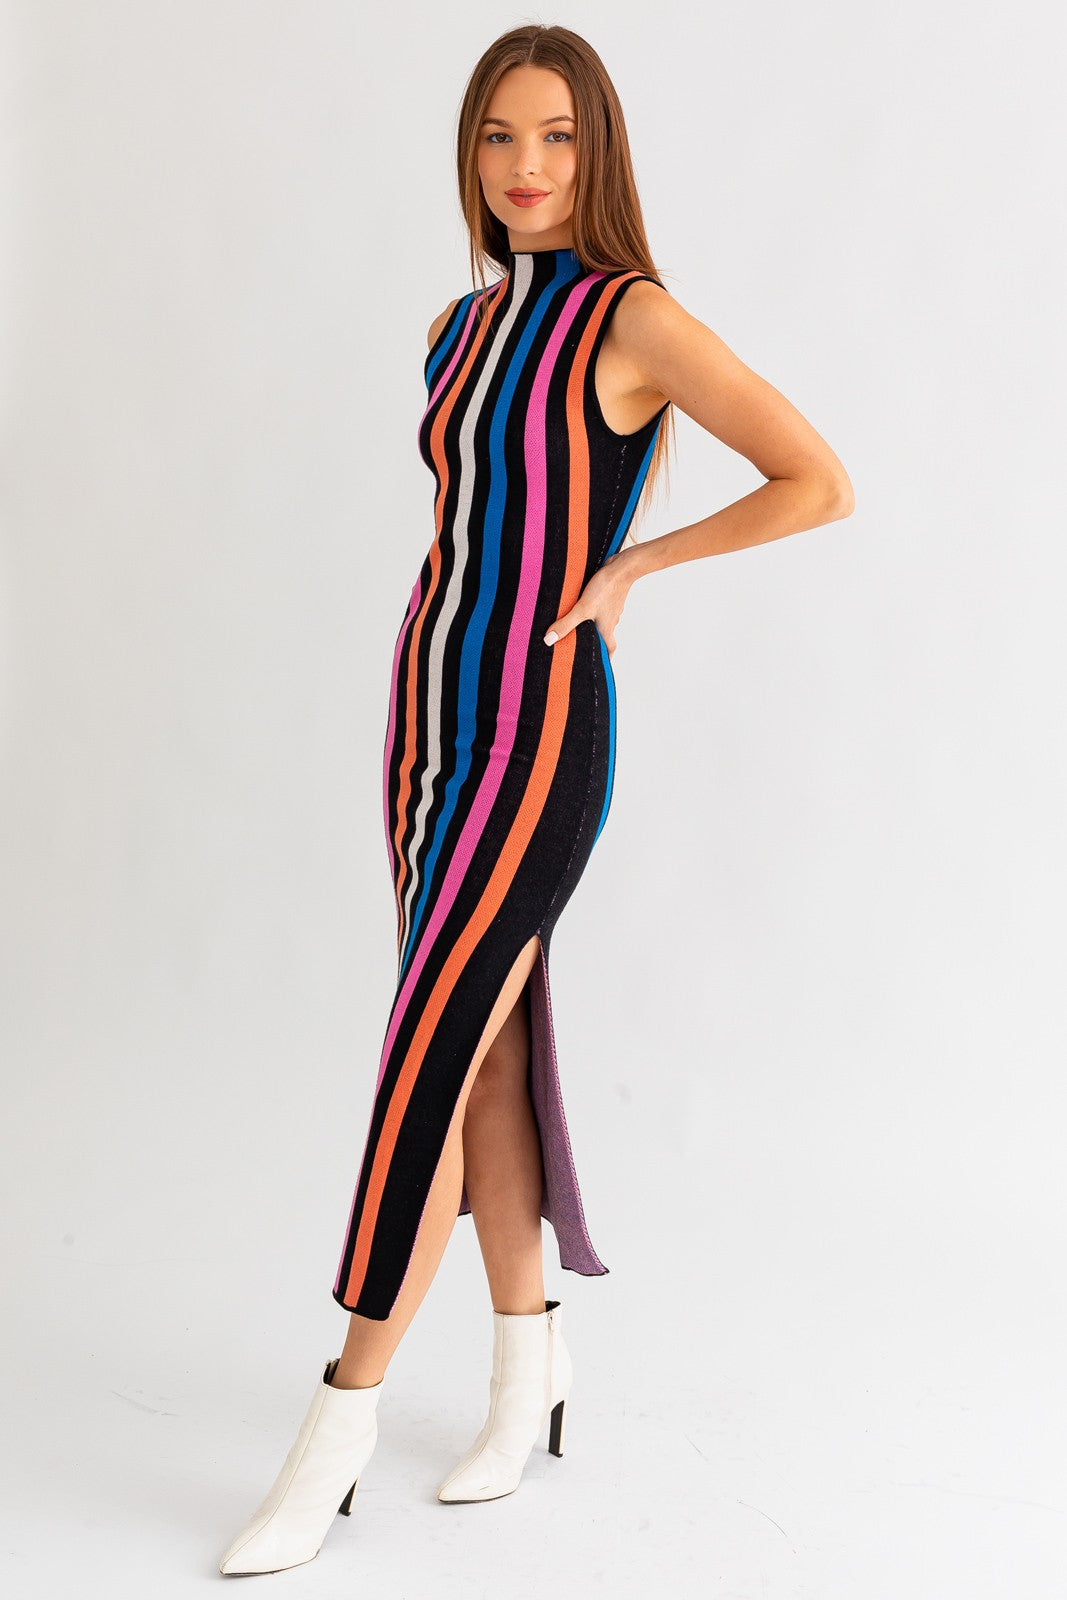 Wren colorful striped dress